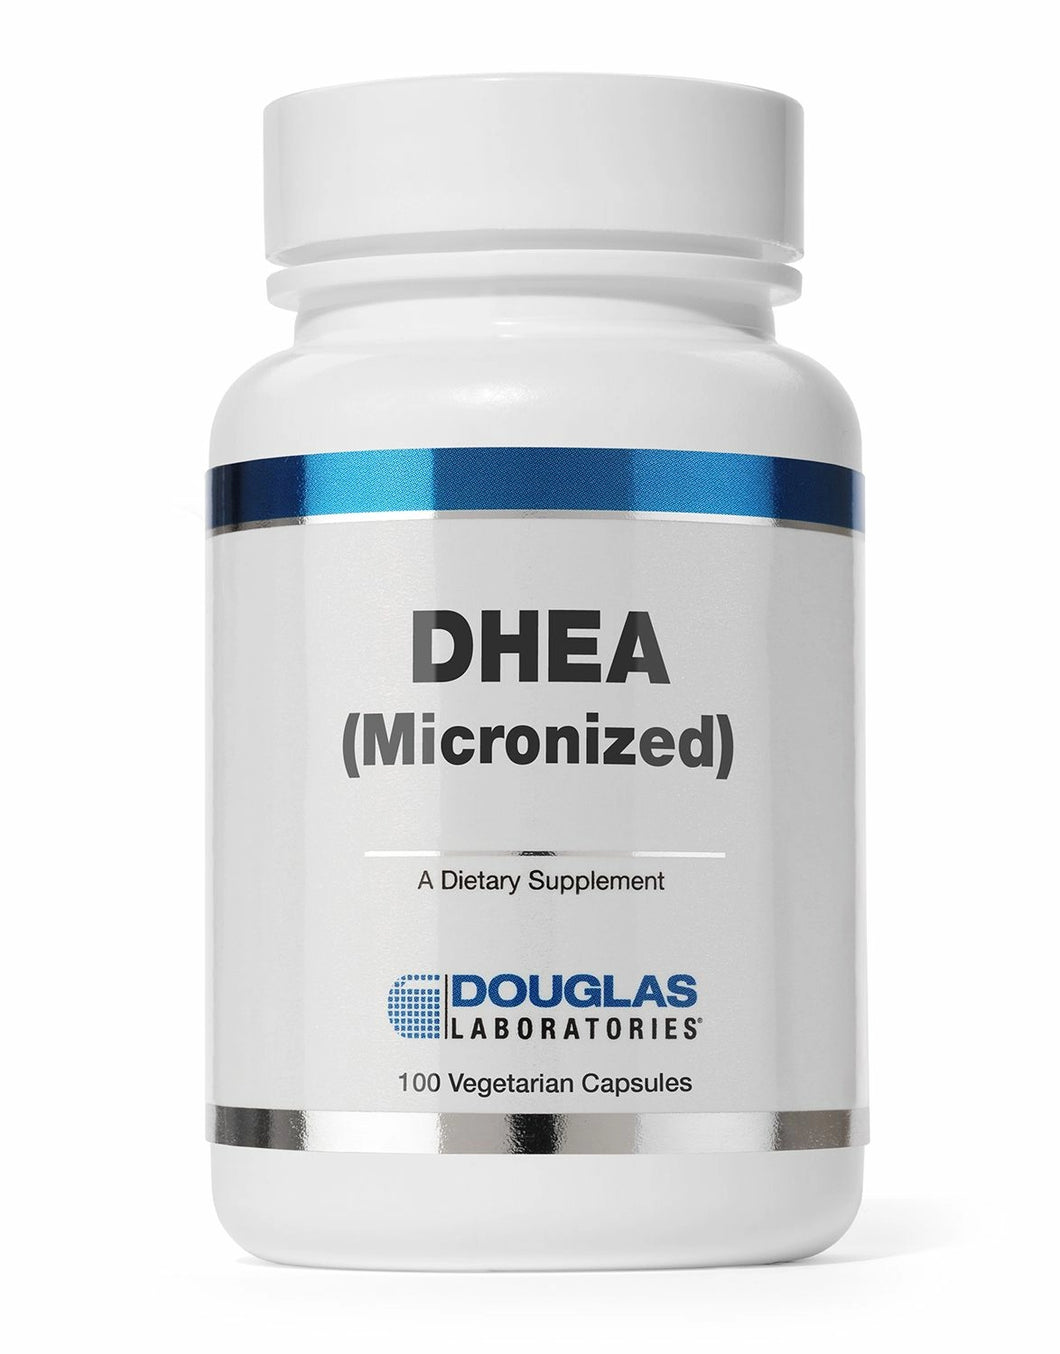 DHEA 25 mg Micronized